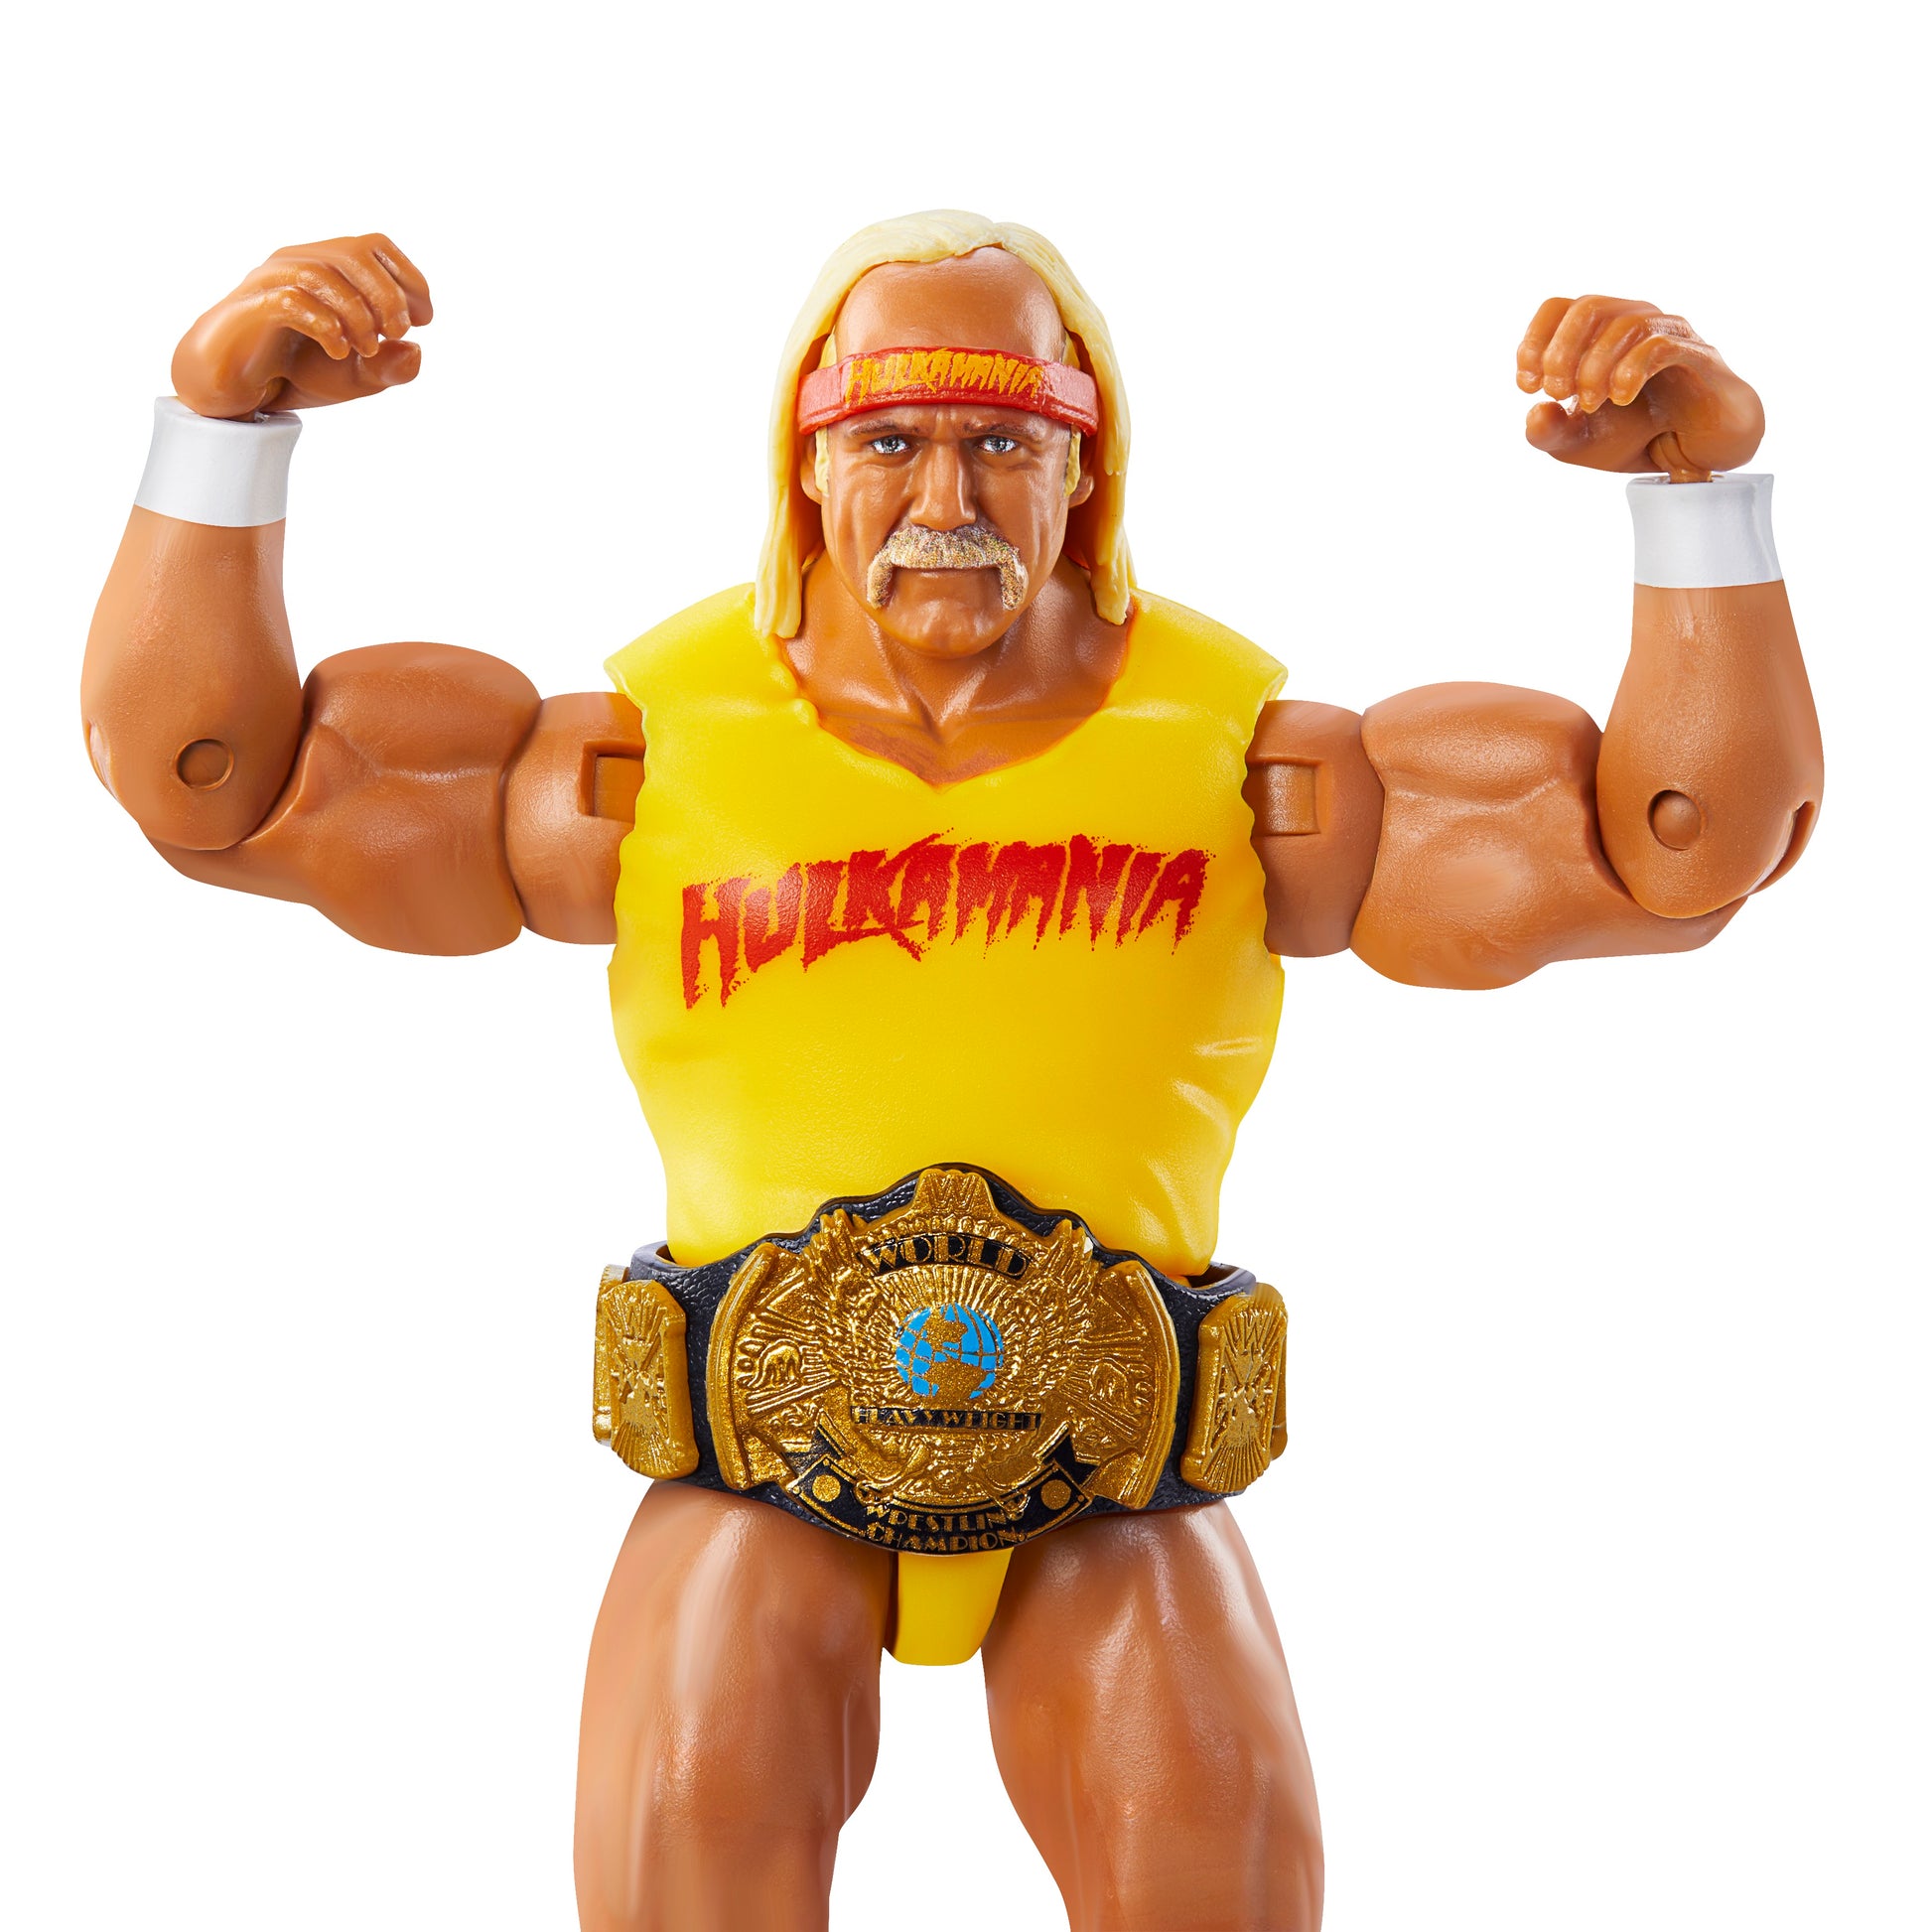 Hulk Hogan's Micro Championship wrestling logo p.2 by RSGN194 on DeviantArt